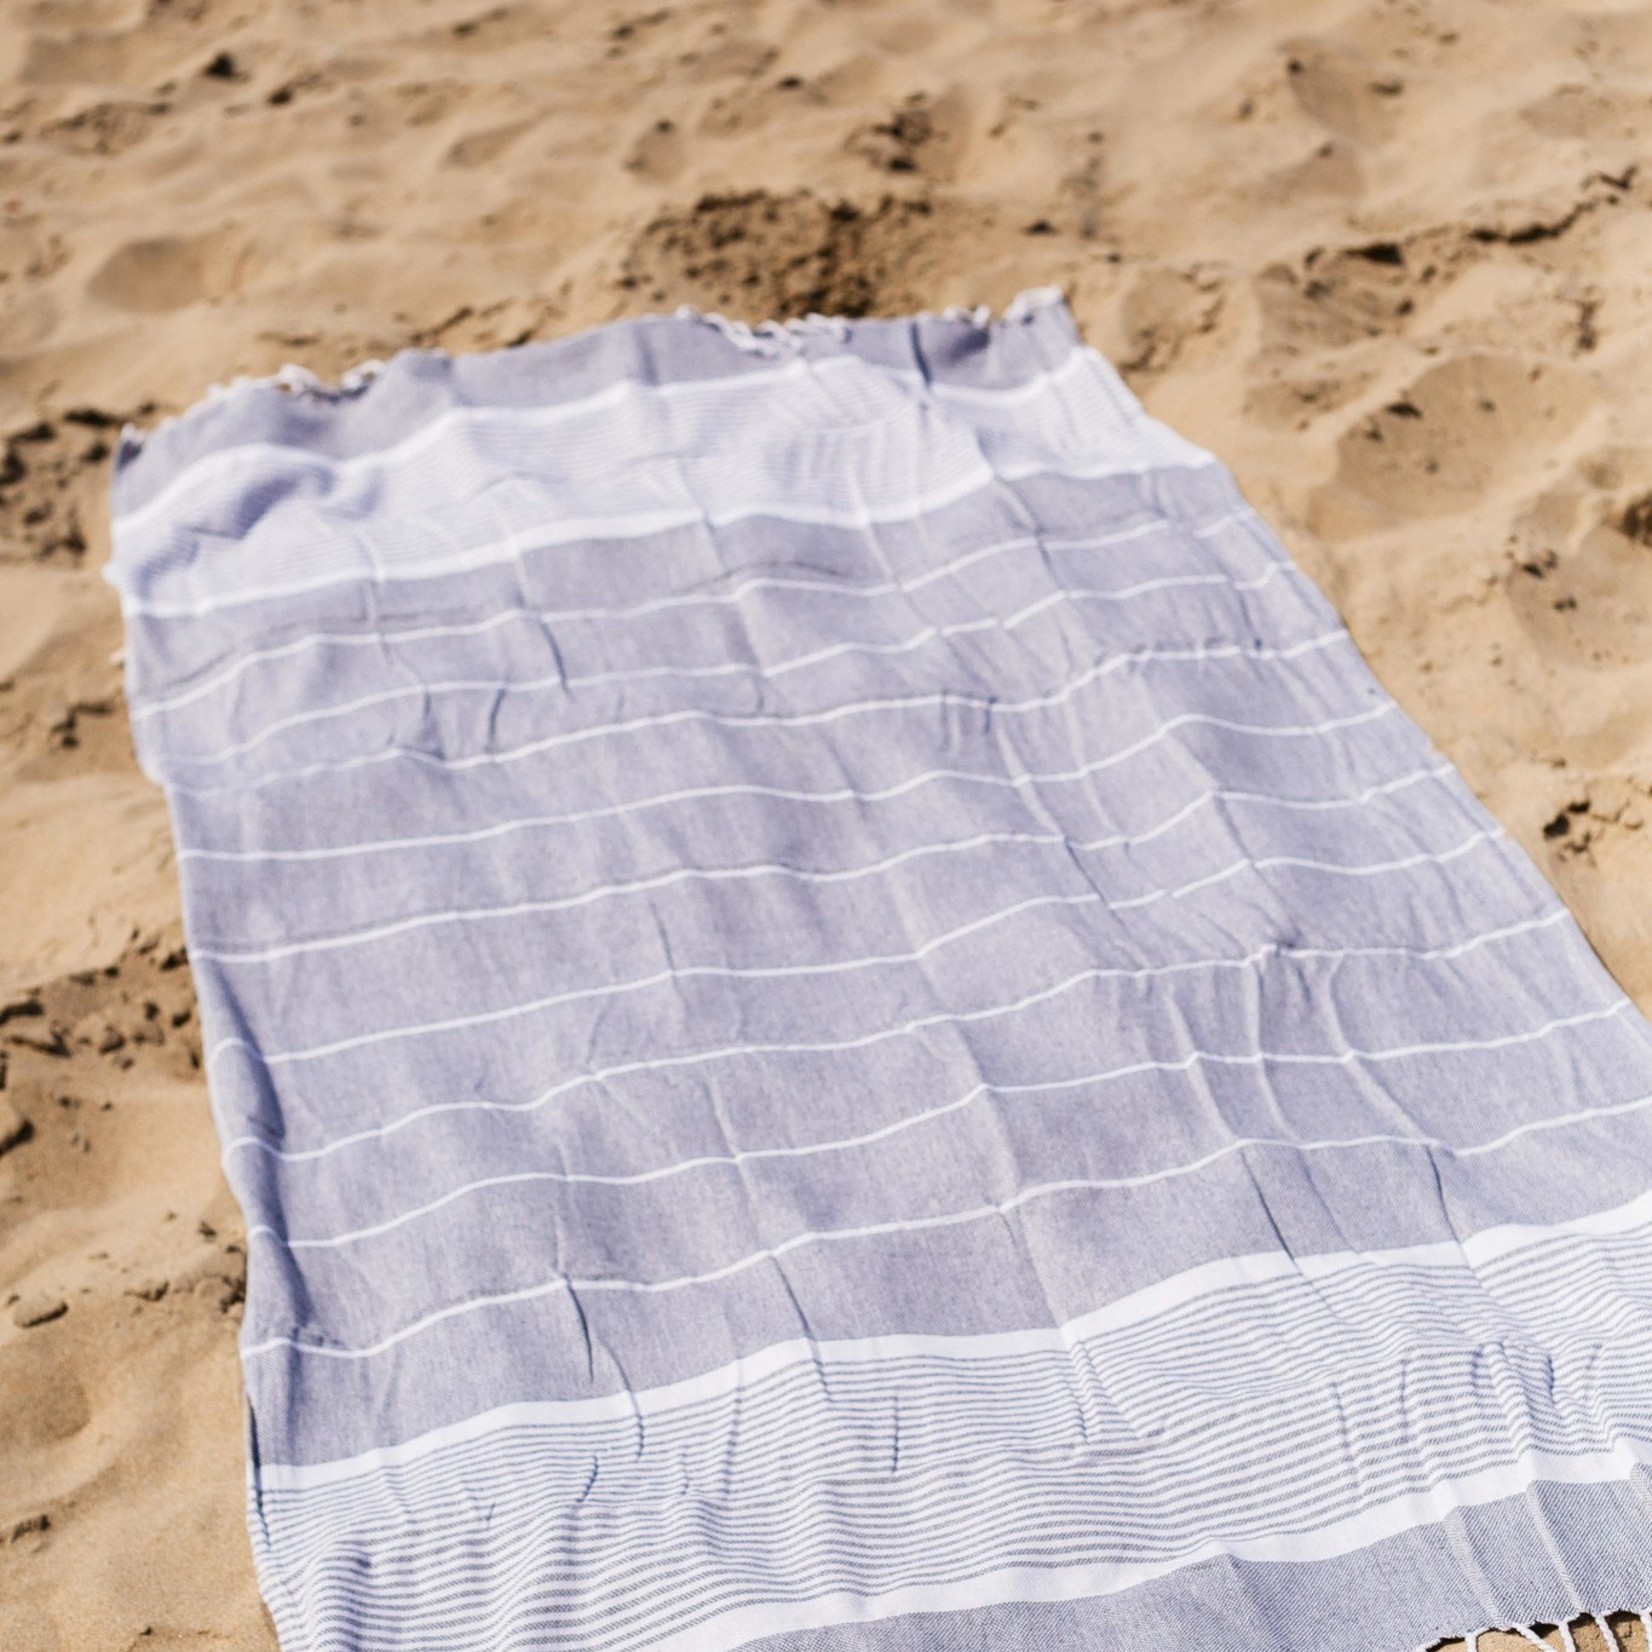 Take A Towel Hammam towel black tropical